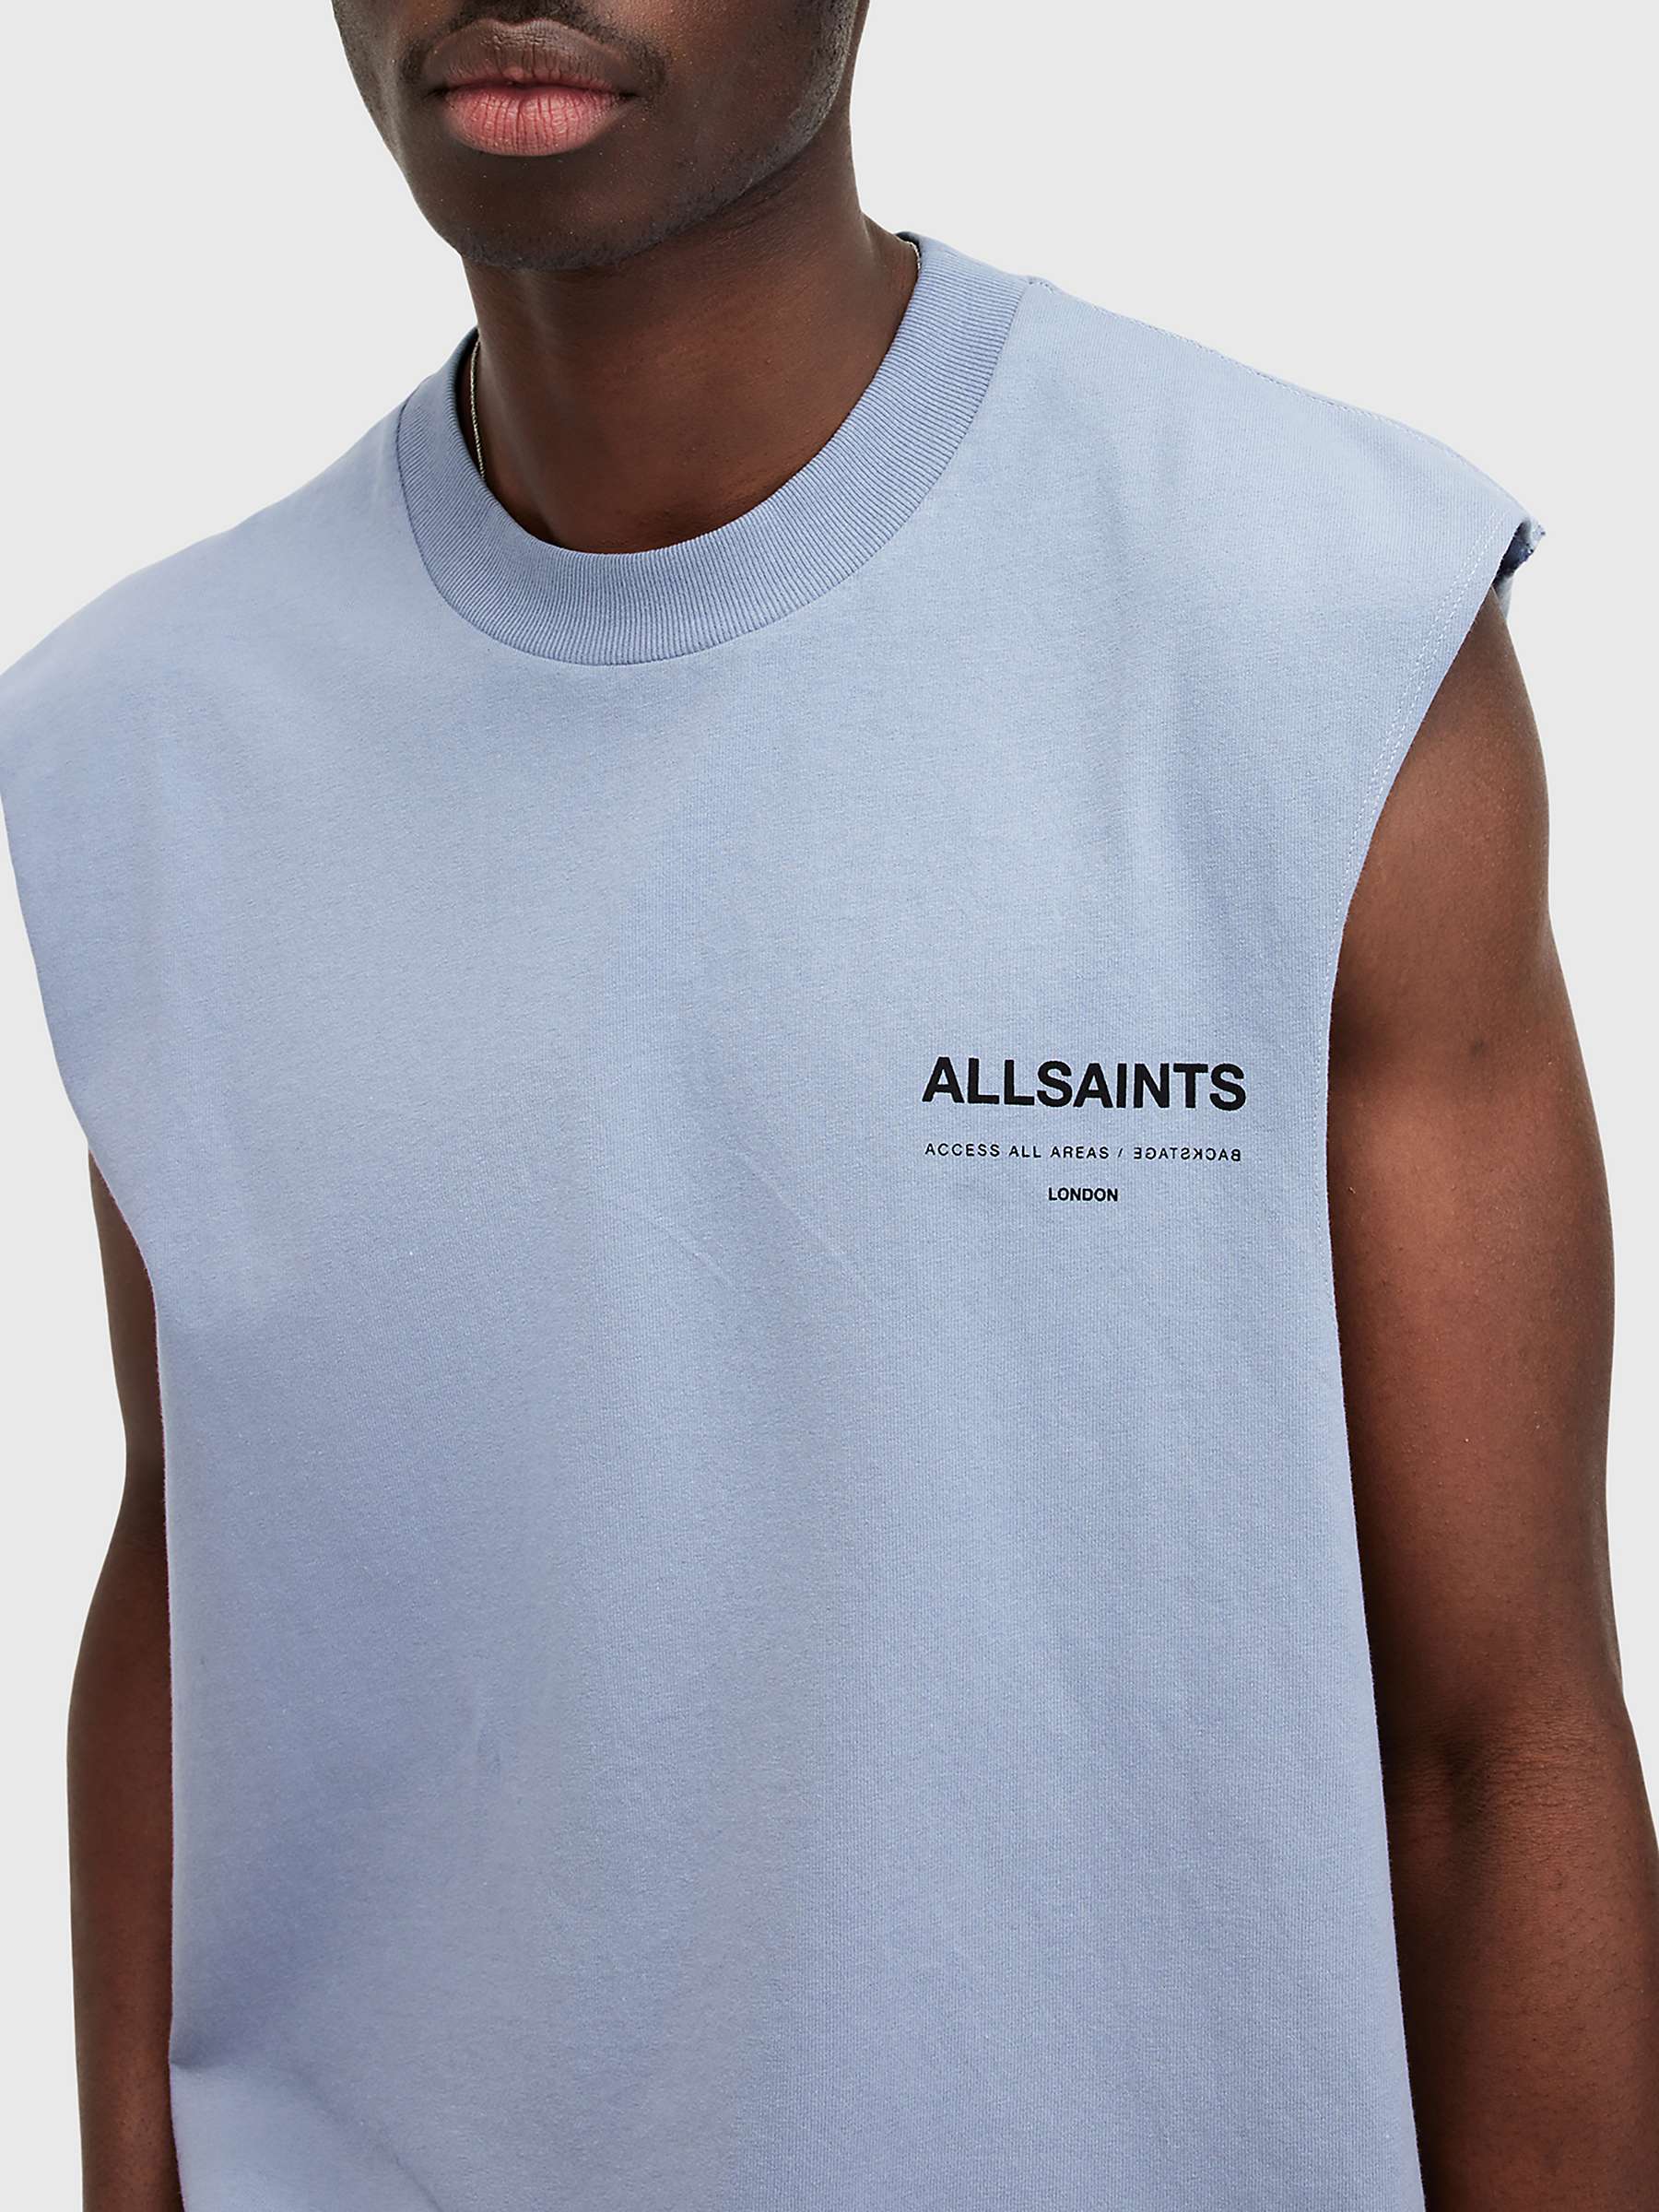 Buy AllSaints Access Sleeveless Crew T-Shirt Online at johnlewis.com